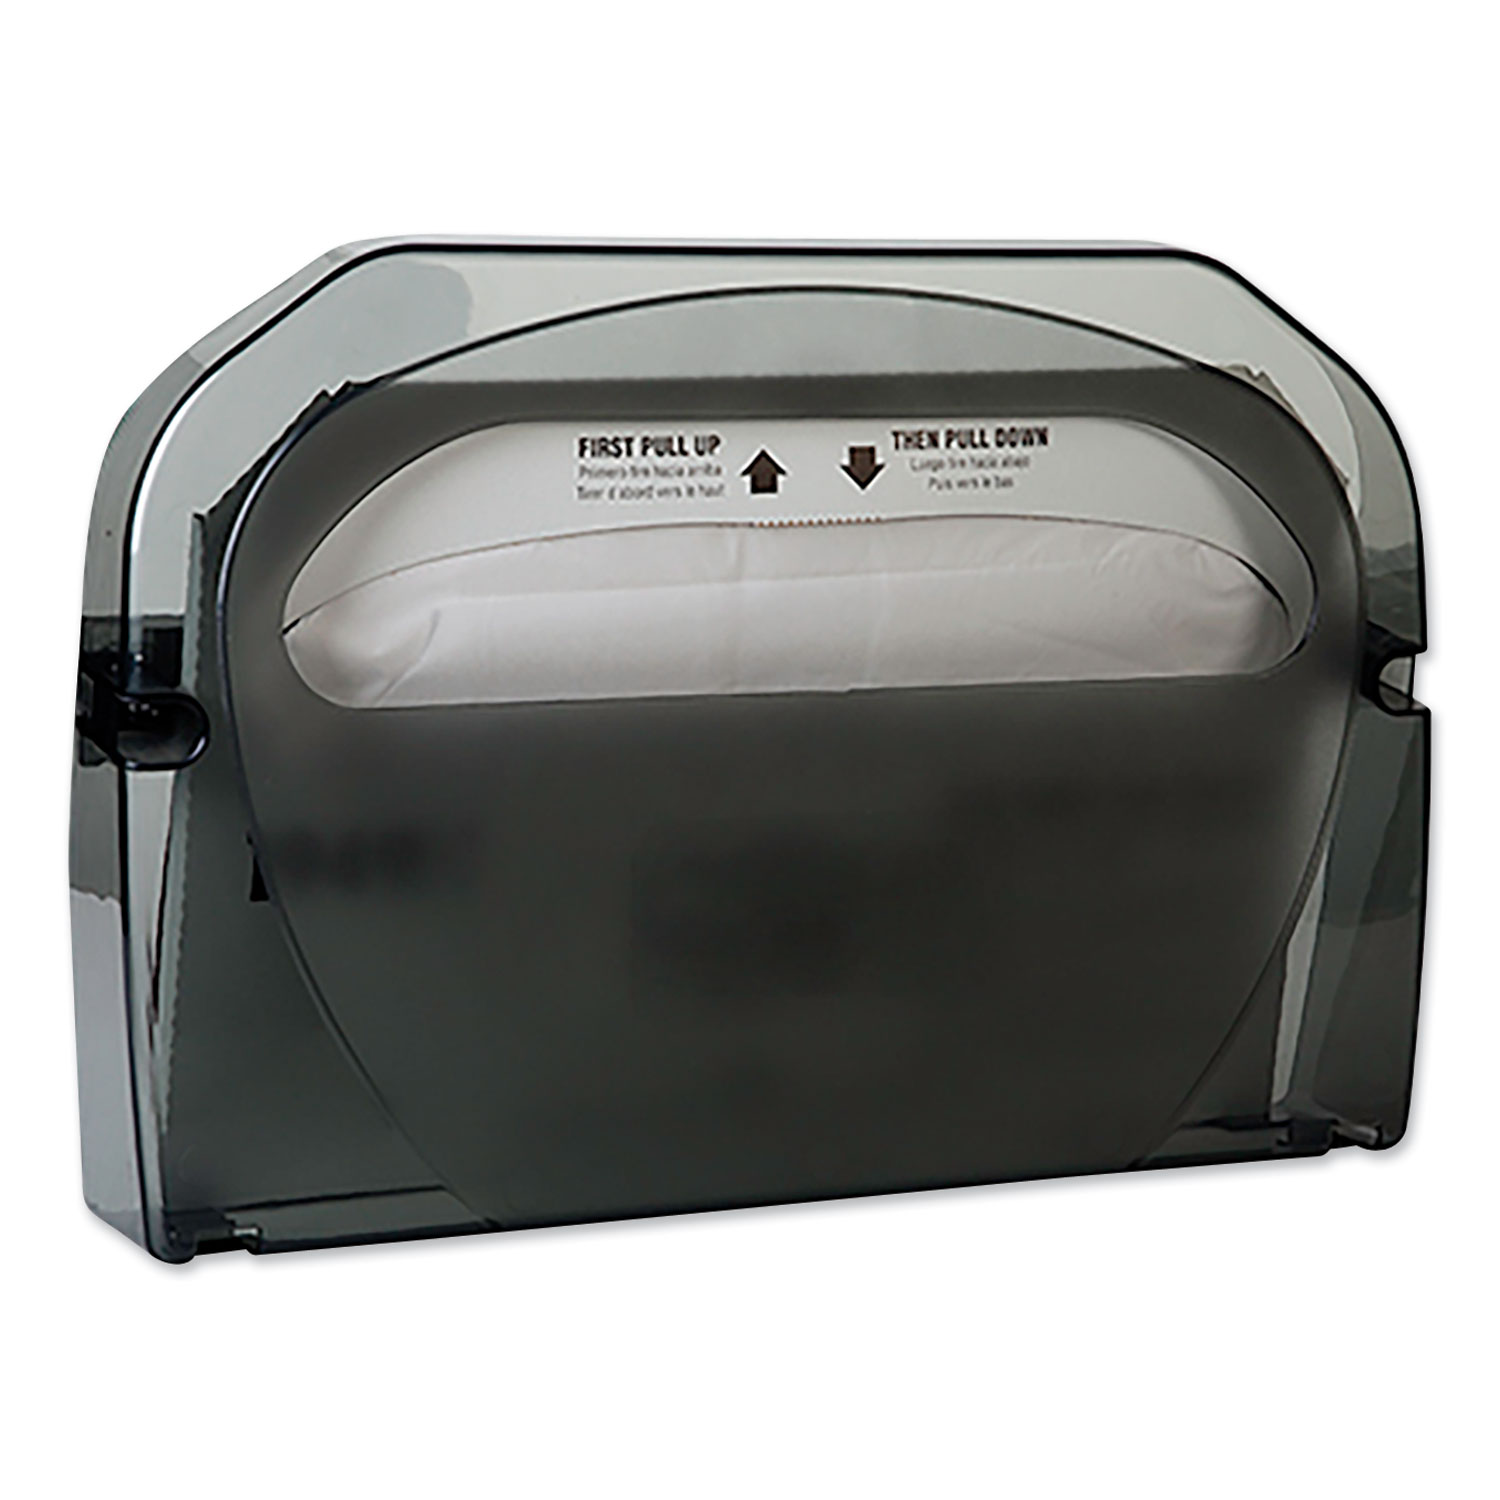  Tork 1951001 Toilet Seat Cover Dispenser, 16 x 3.125 x 11.5, Smoke, 12/Carton (TRK1951001) 